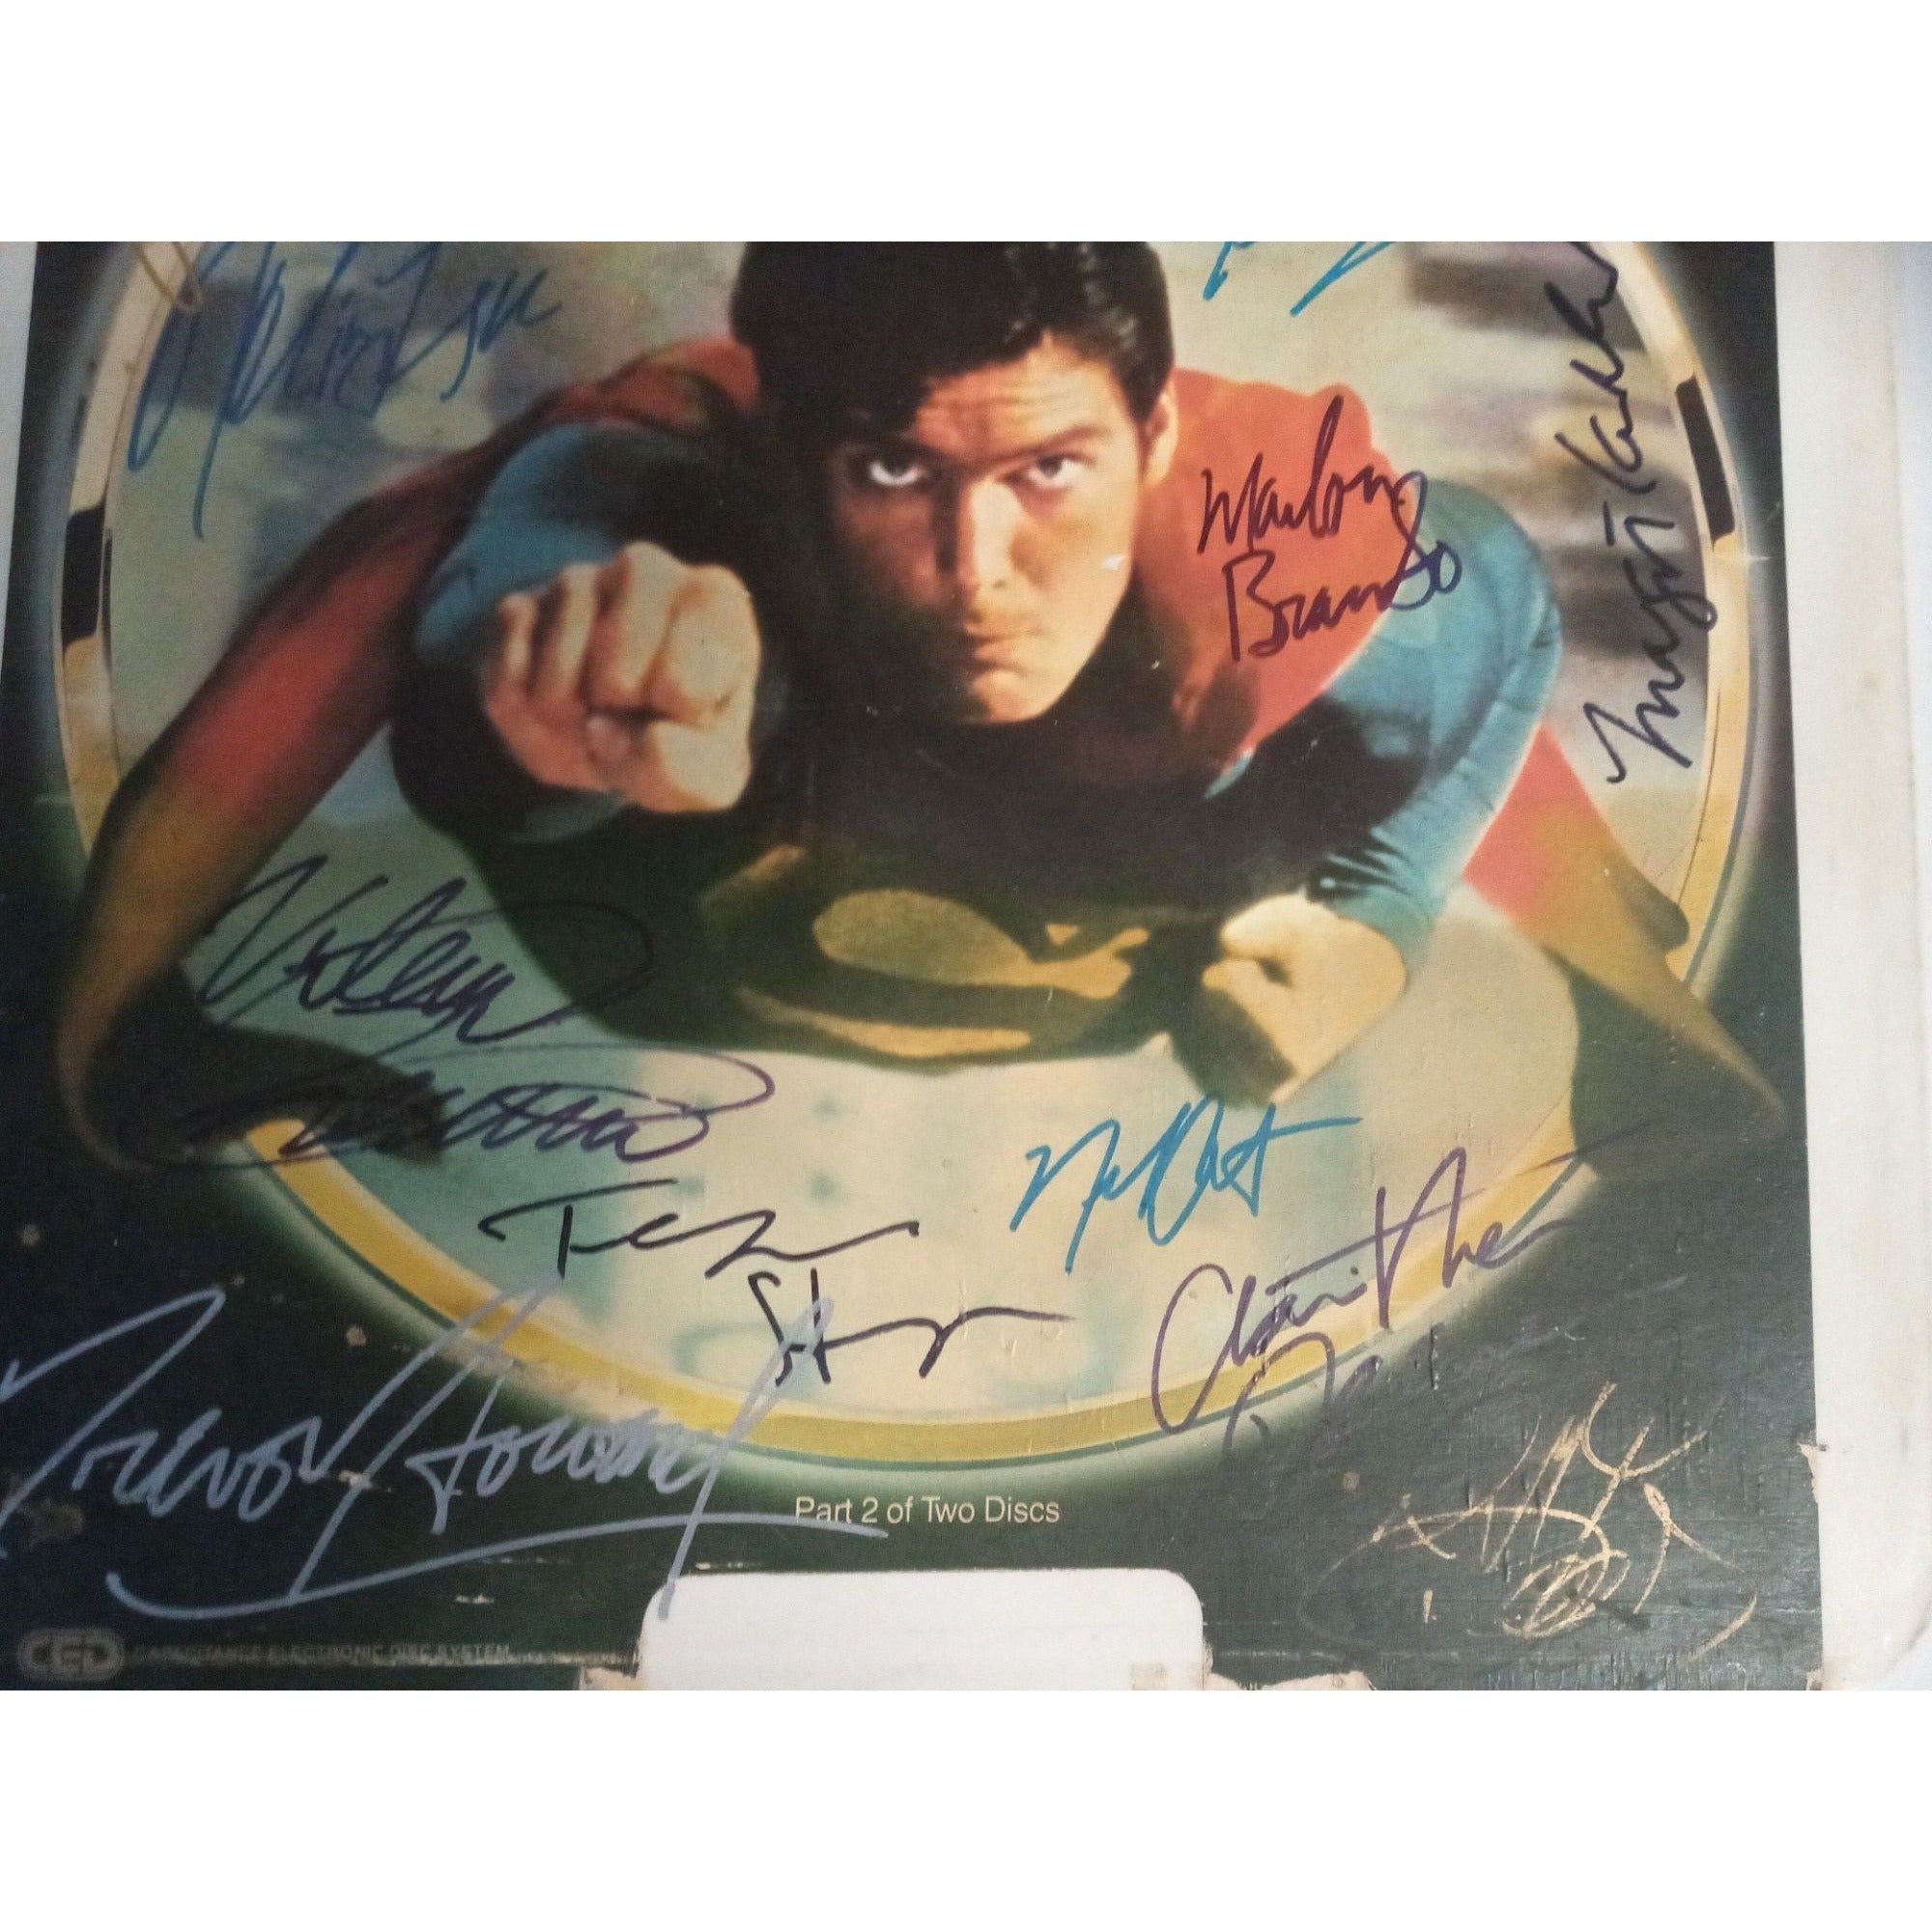 Superman Christopher Reeve Gene Hackman Marlon Brando cast signed video disc